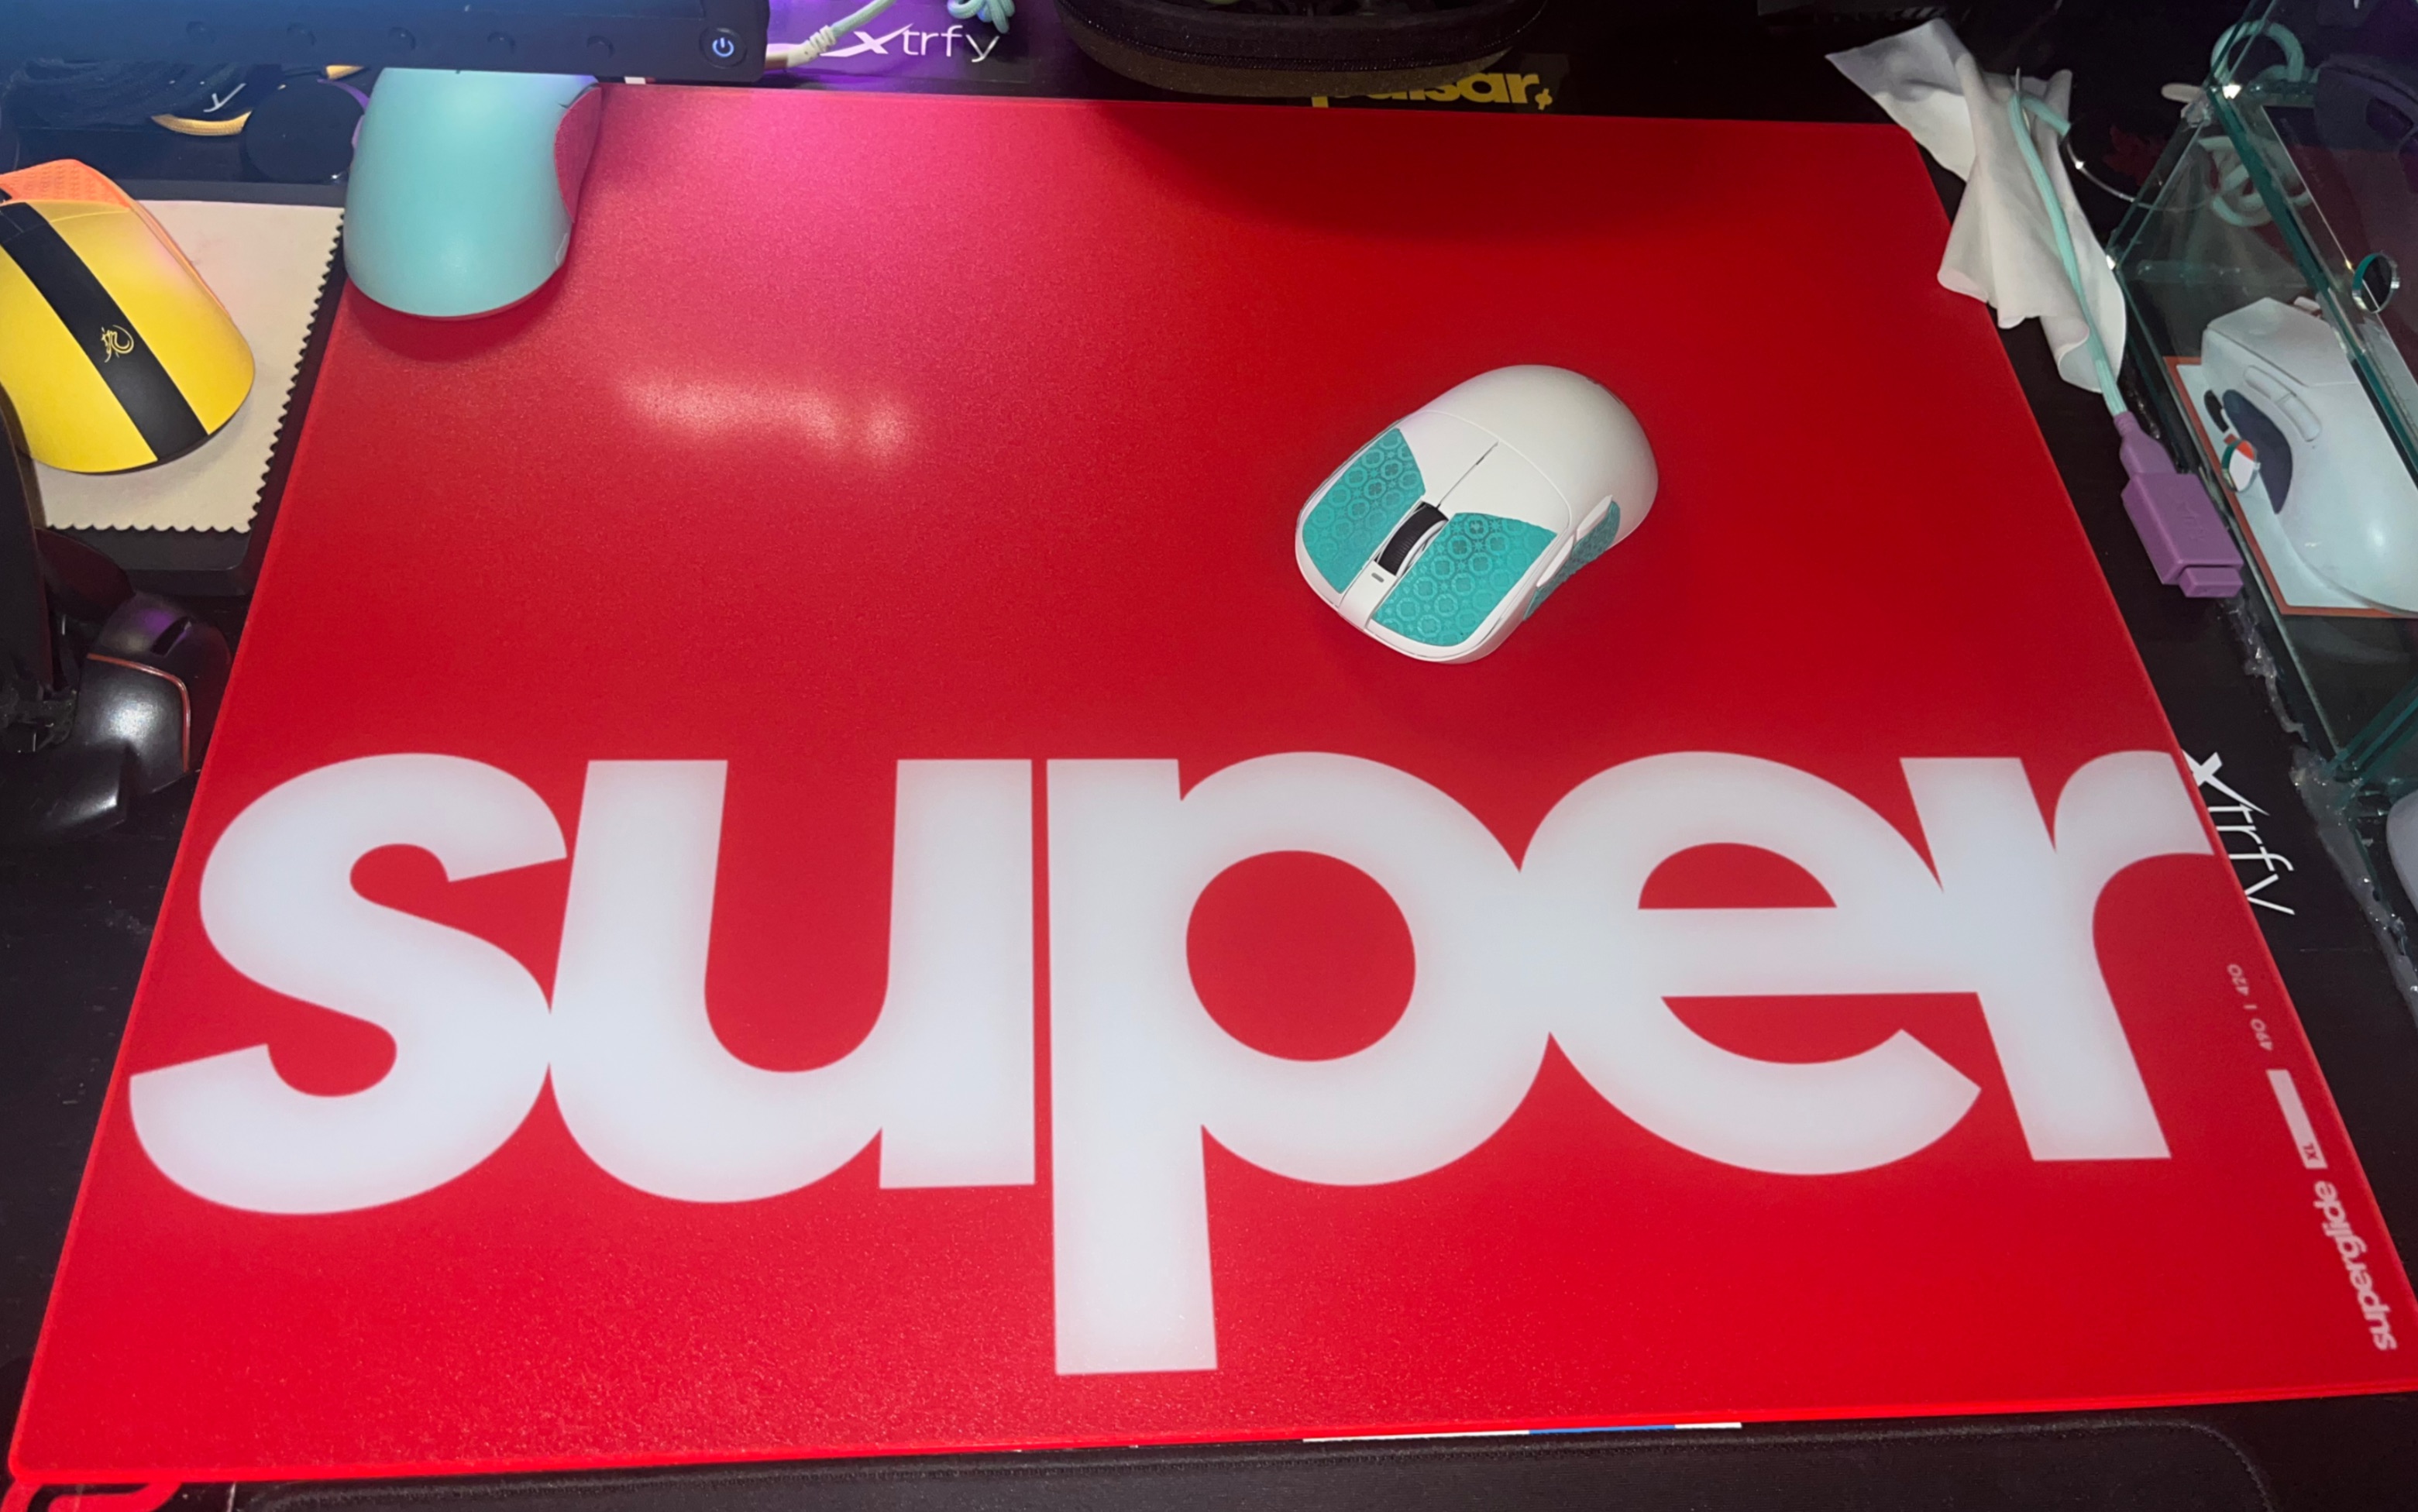 Pulsar Superglide 玻璃鼠标垫简单开箱